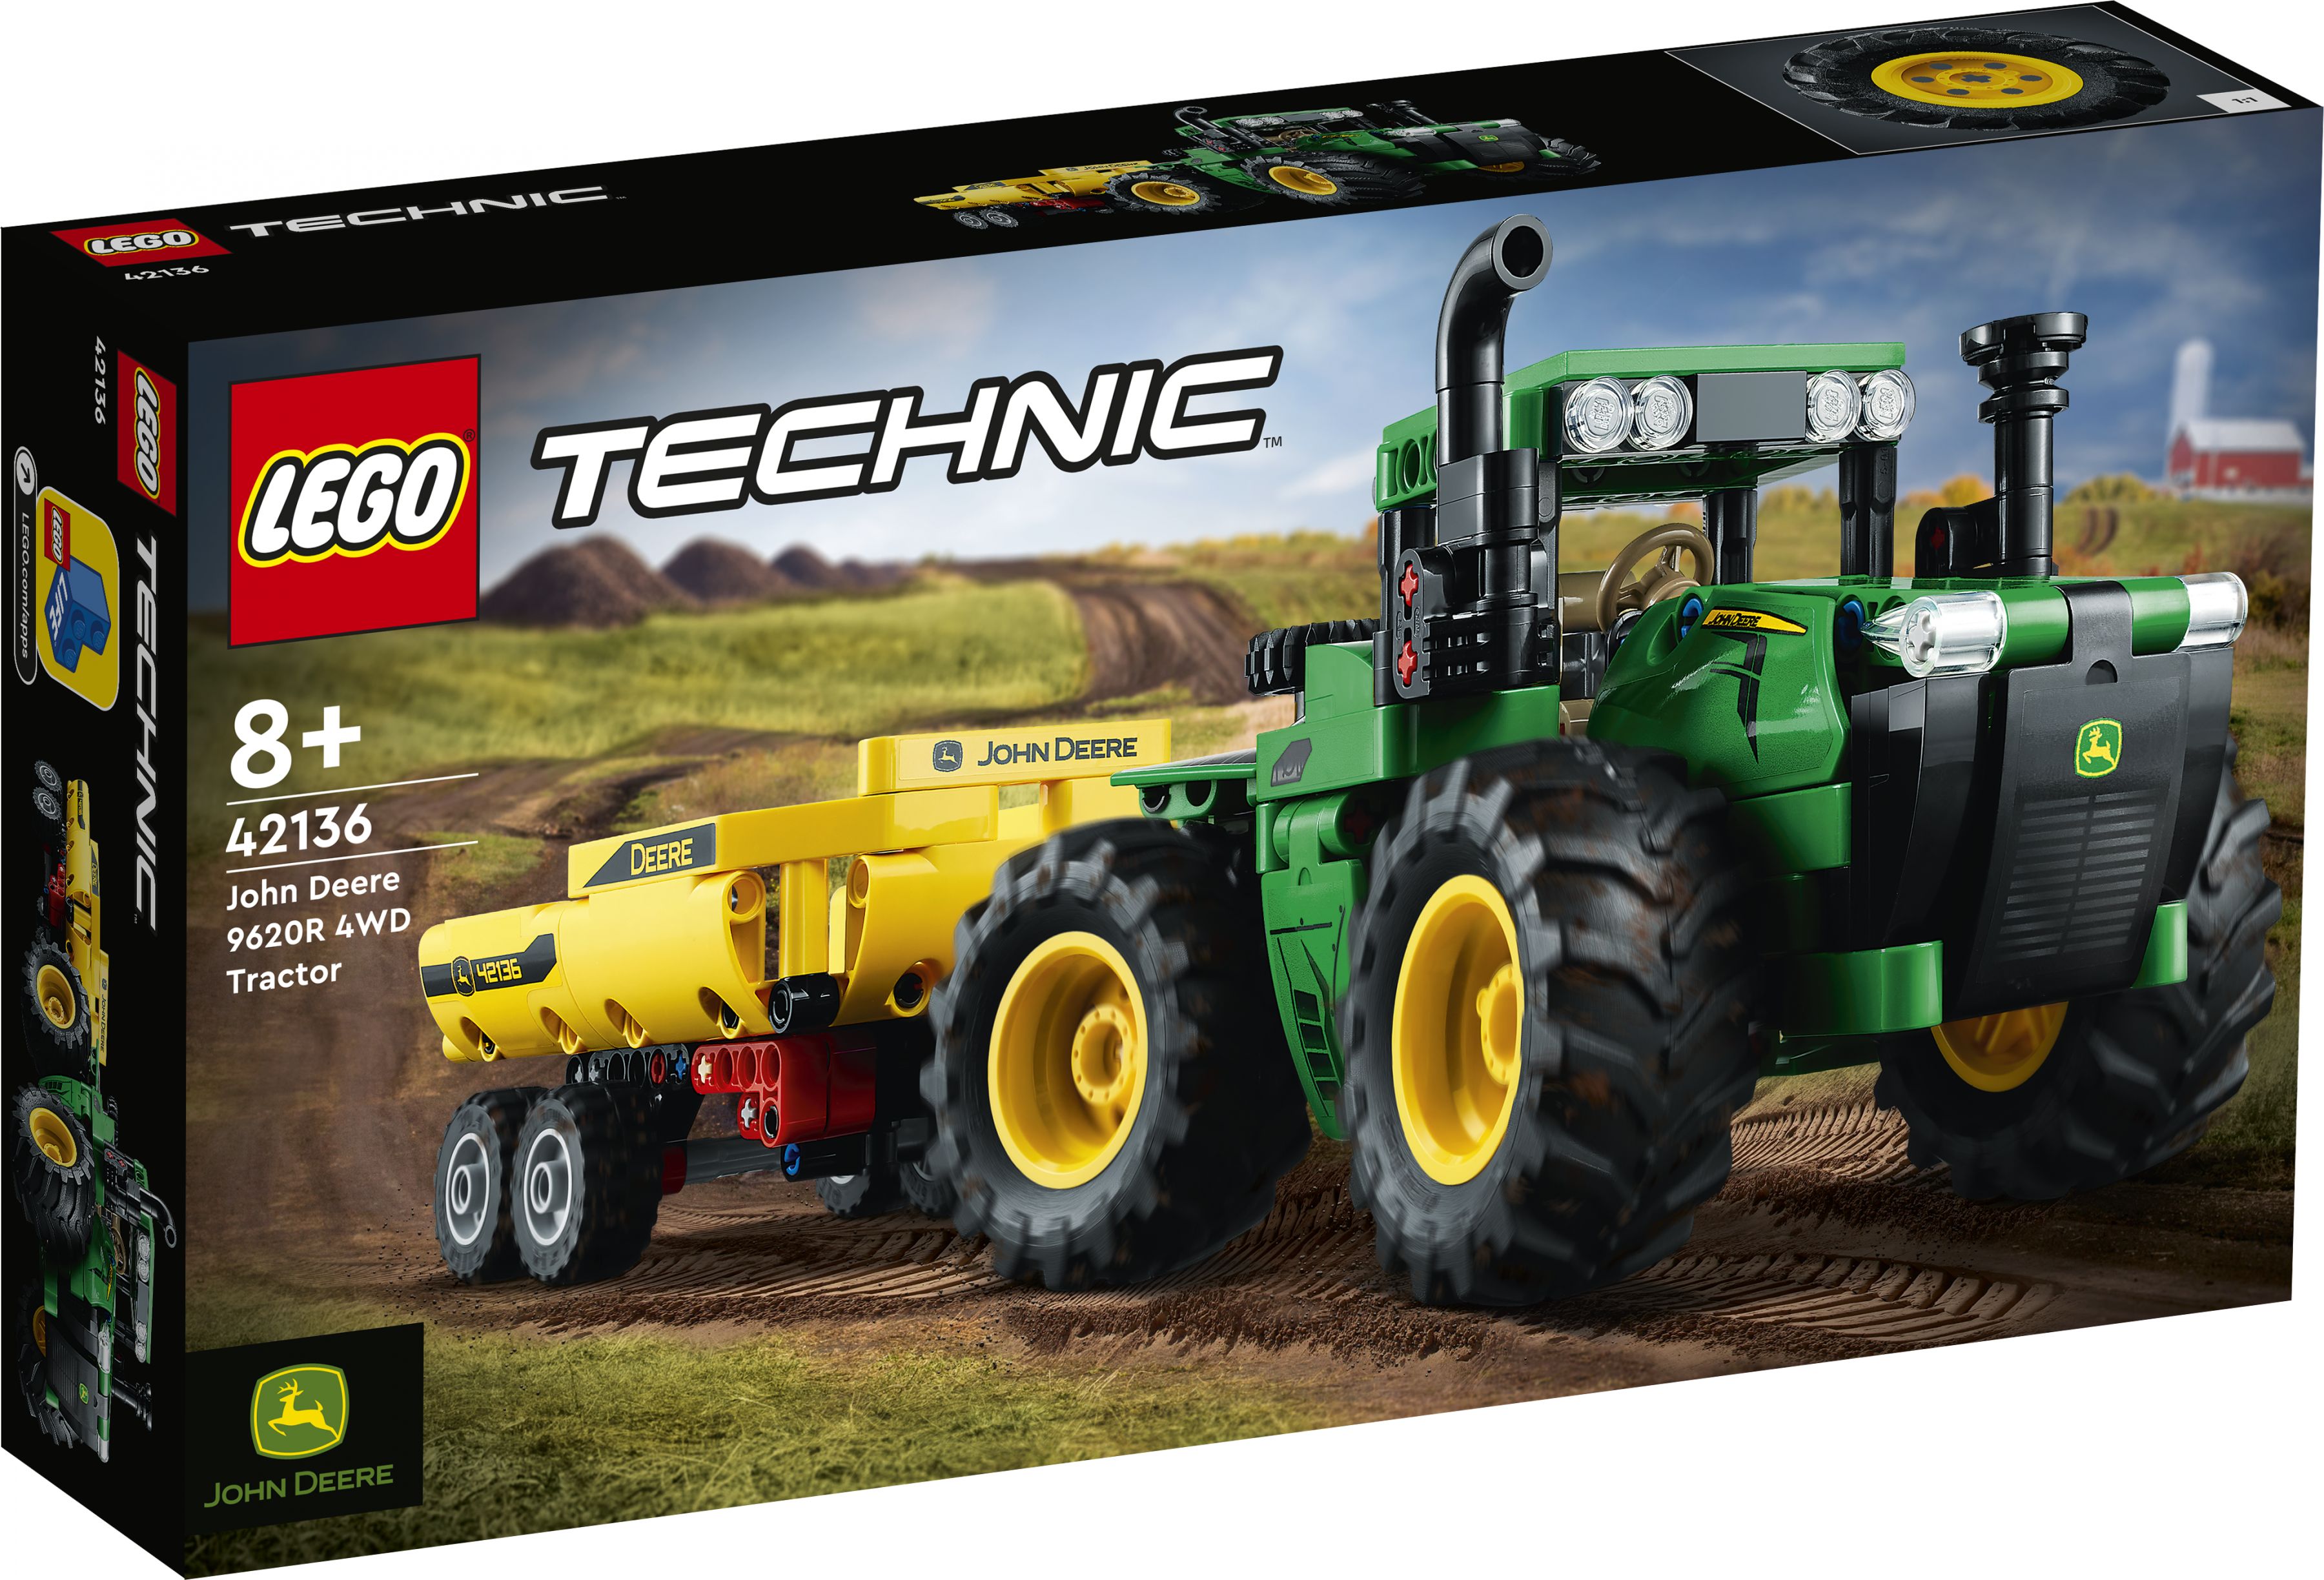 LEGO Technic 42136 John Deere 9620R 4WD Tractor LEGO_42136_Box1_v29.jpg